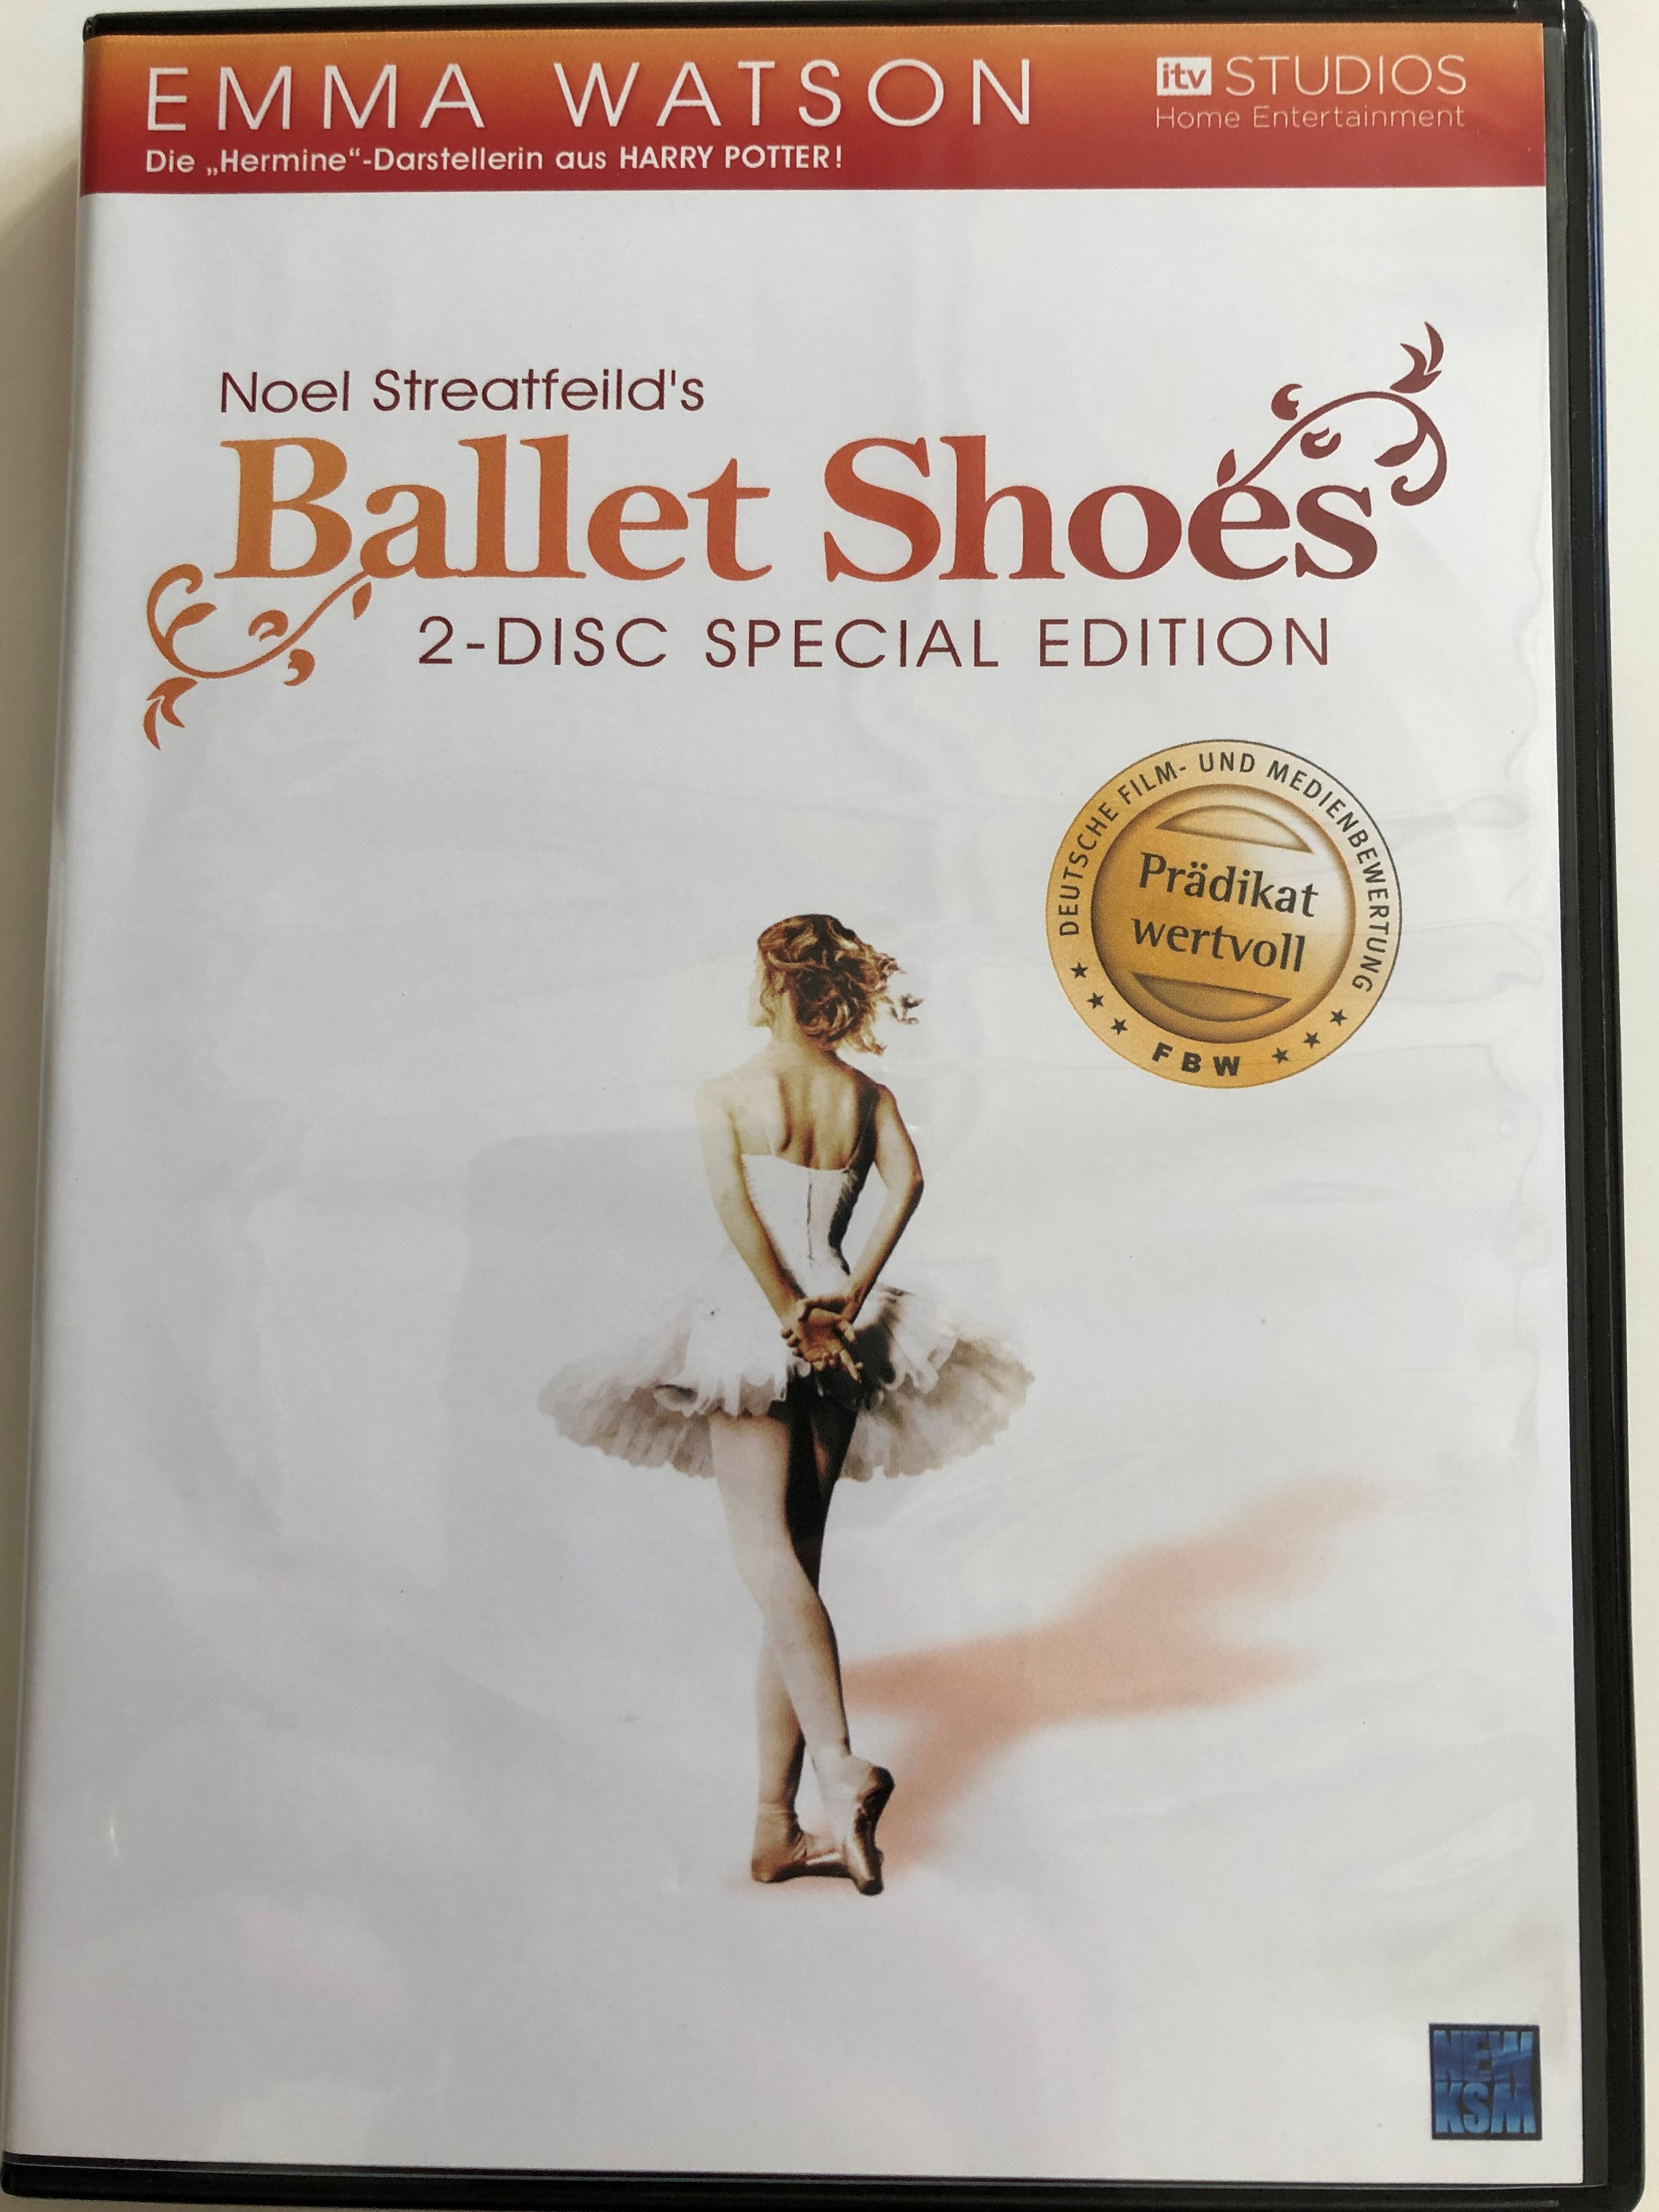 Noel Streatfeild's Ballet Shoes DVD 2007 / 2-Disc special Edition /  Directed by Sandra Goldbacher / Starring: Emma Watson, Richard Griffiths,  Lucy Boynton, Yasmin Paige, Emilia Fox - bibleinmylanguage